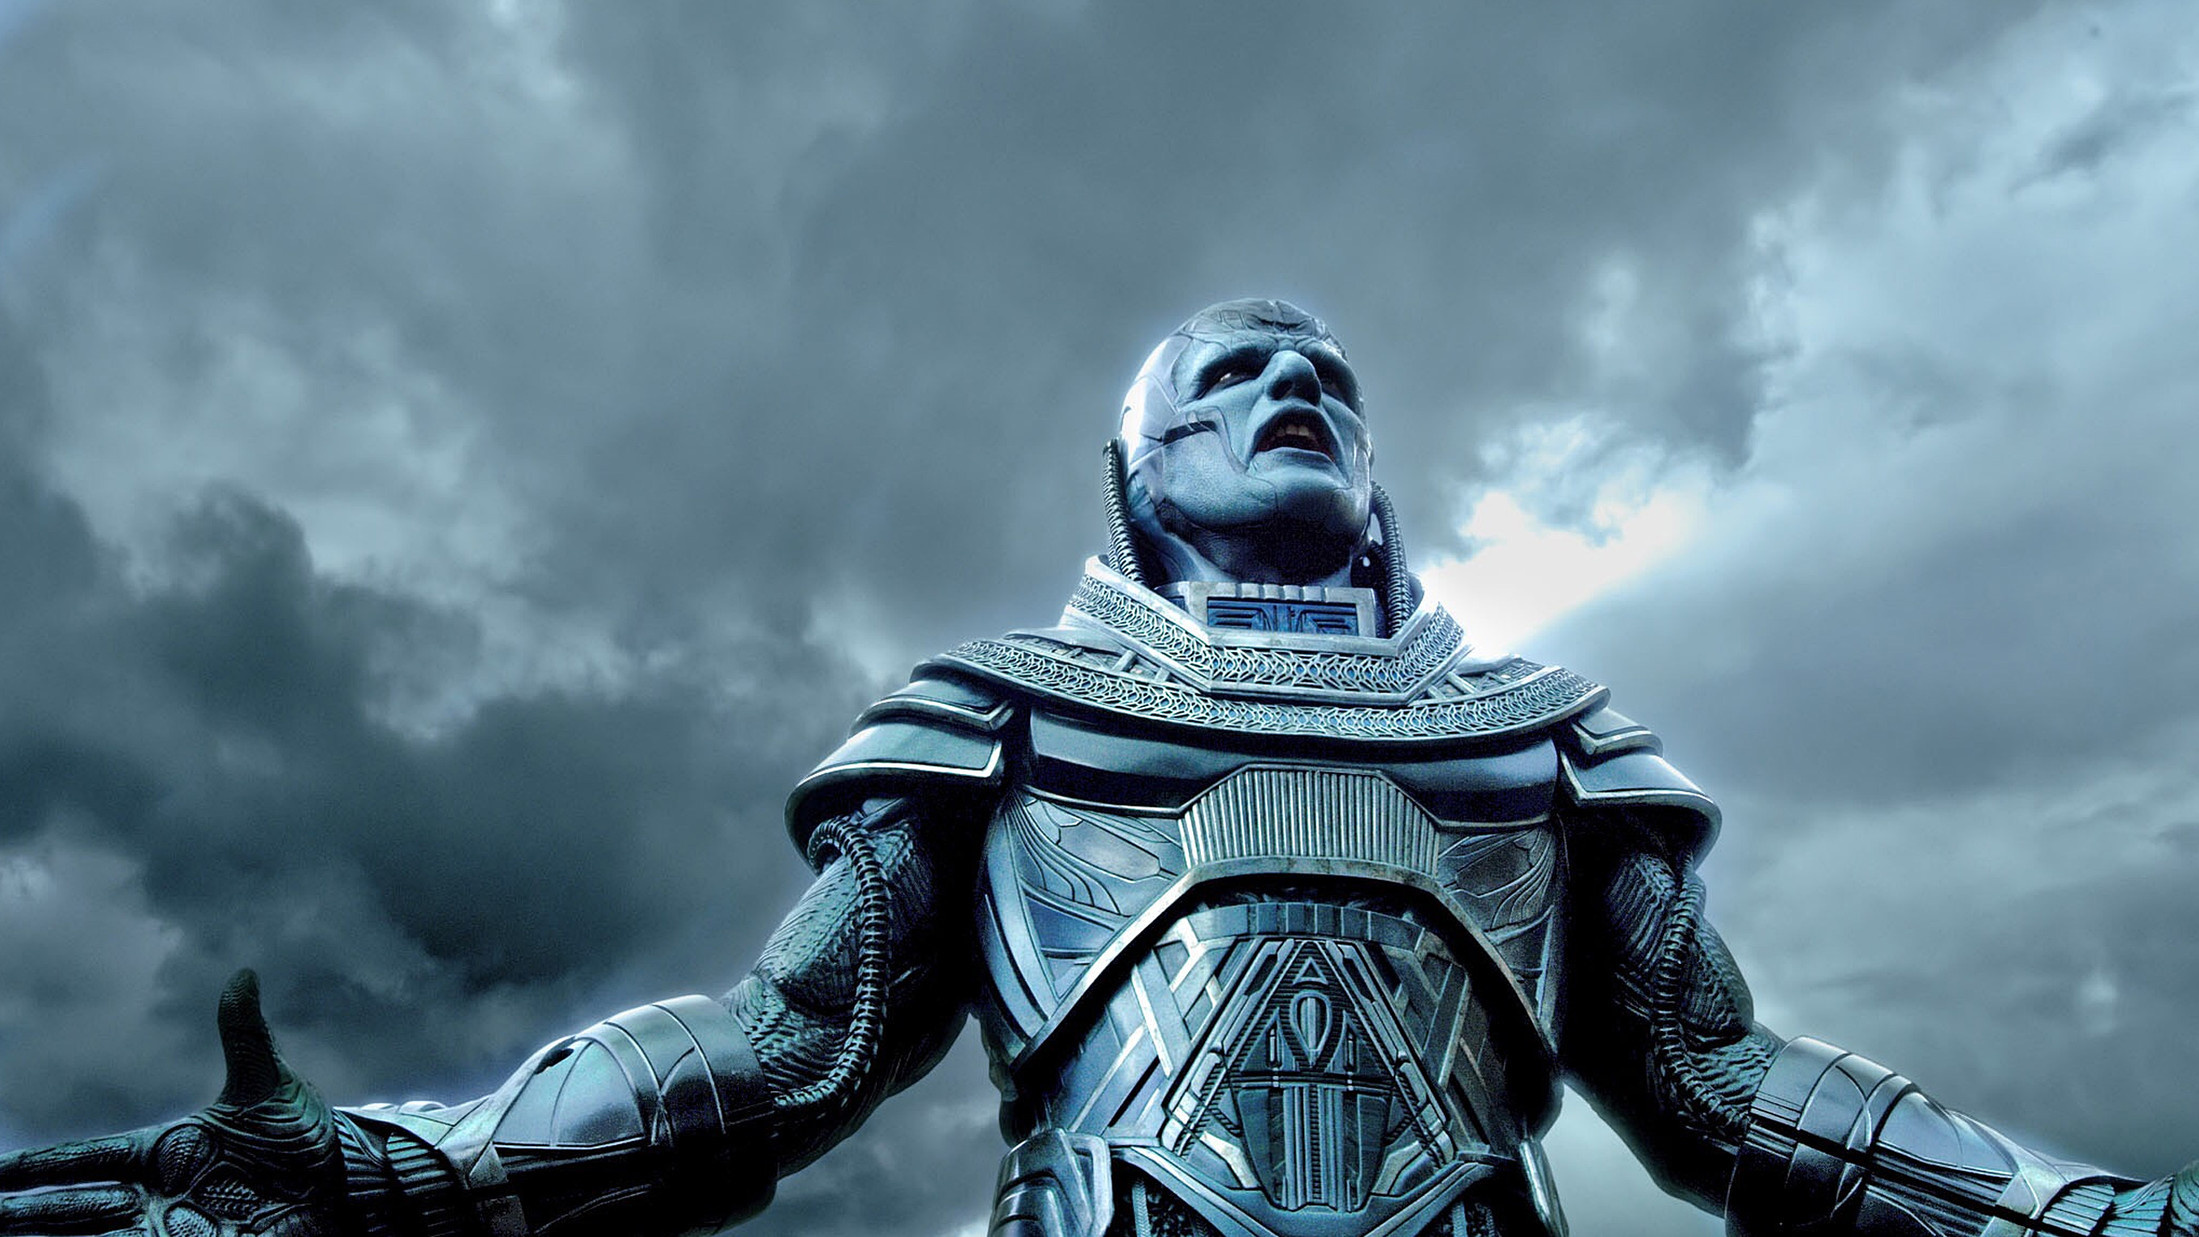 X-men apocalypse wallpaper, HD background image, Mutant showdown, Action-packed, 2200x1240 HD Desktop